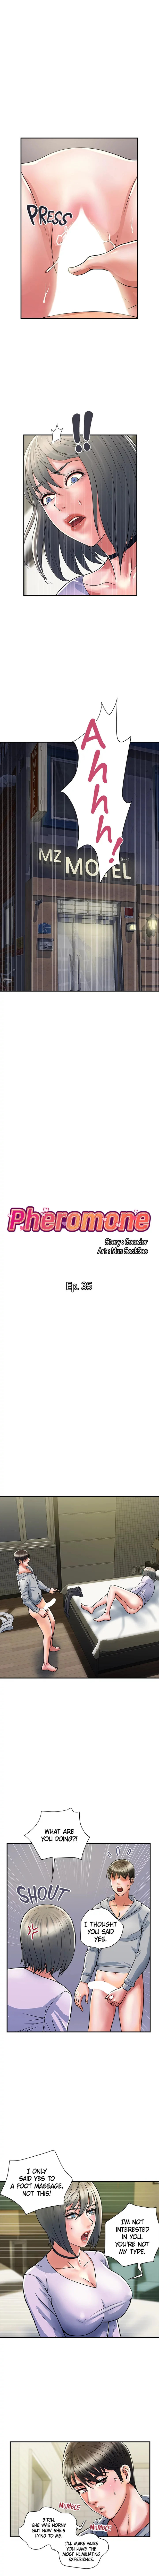 Pheromones - Chapter 35 Page 1